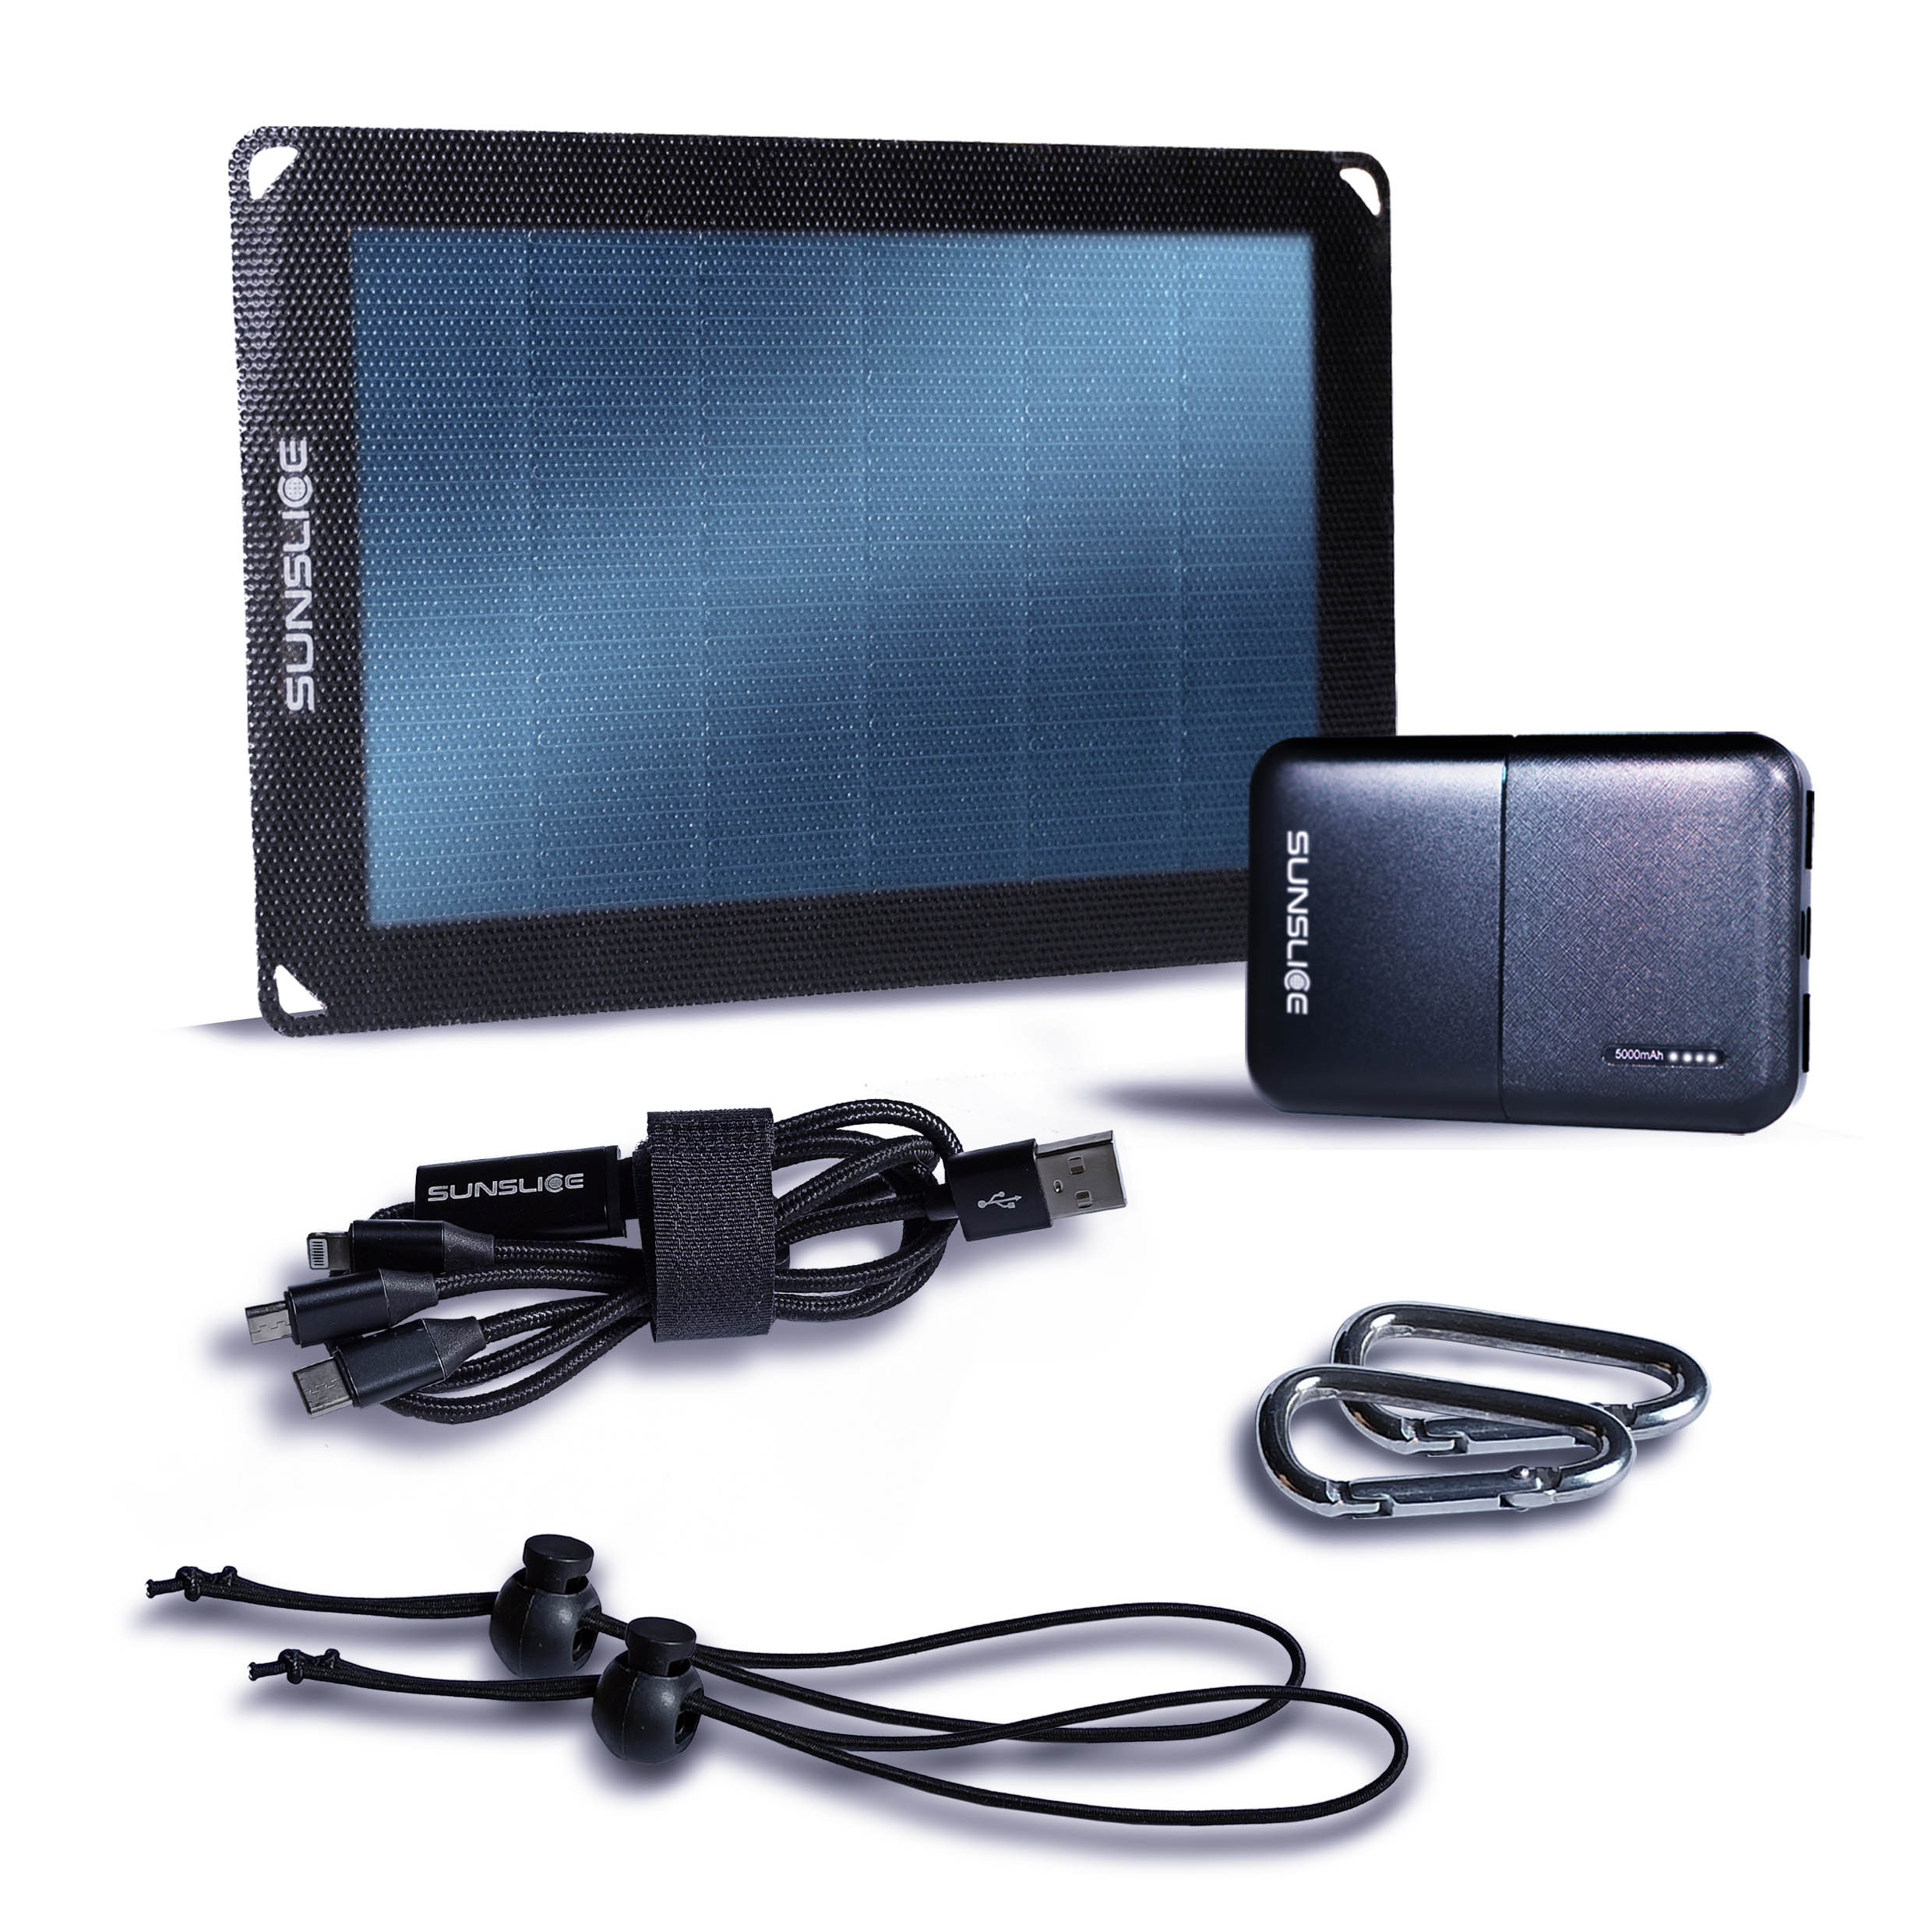 sunslice portable 6 watt solar panel and 5000mAh power bank nomad kit